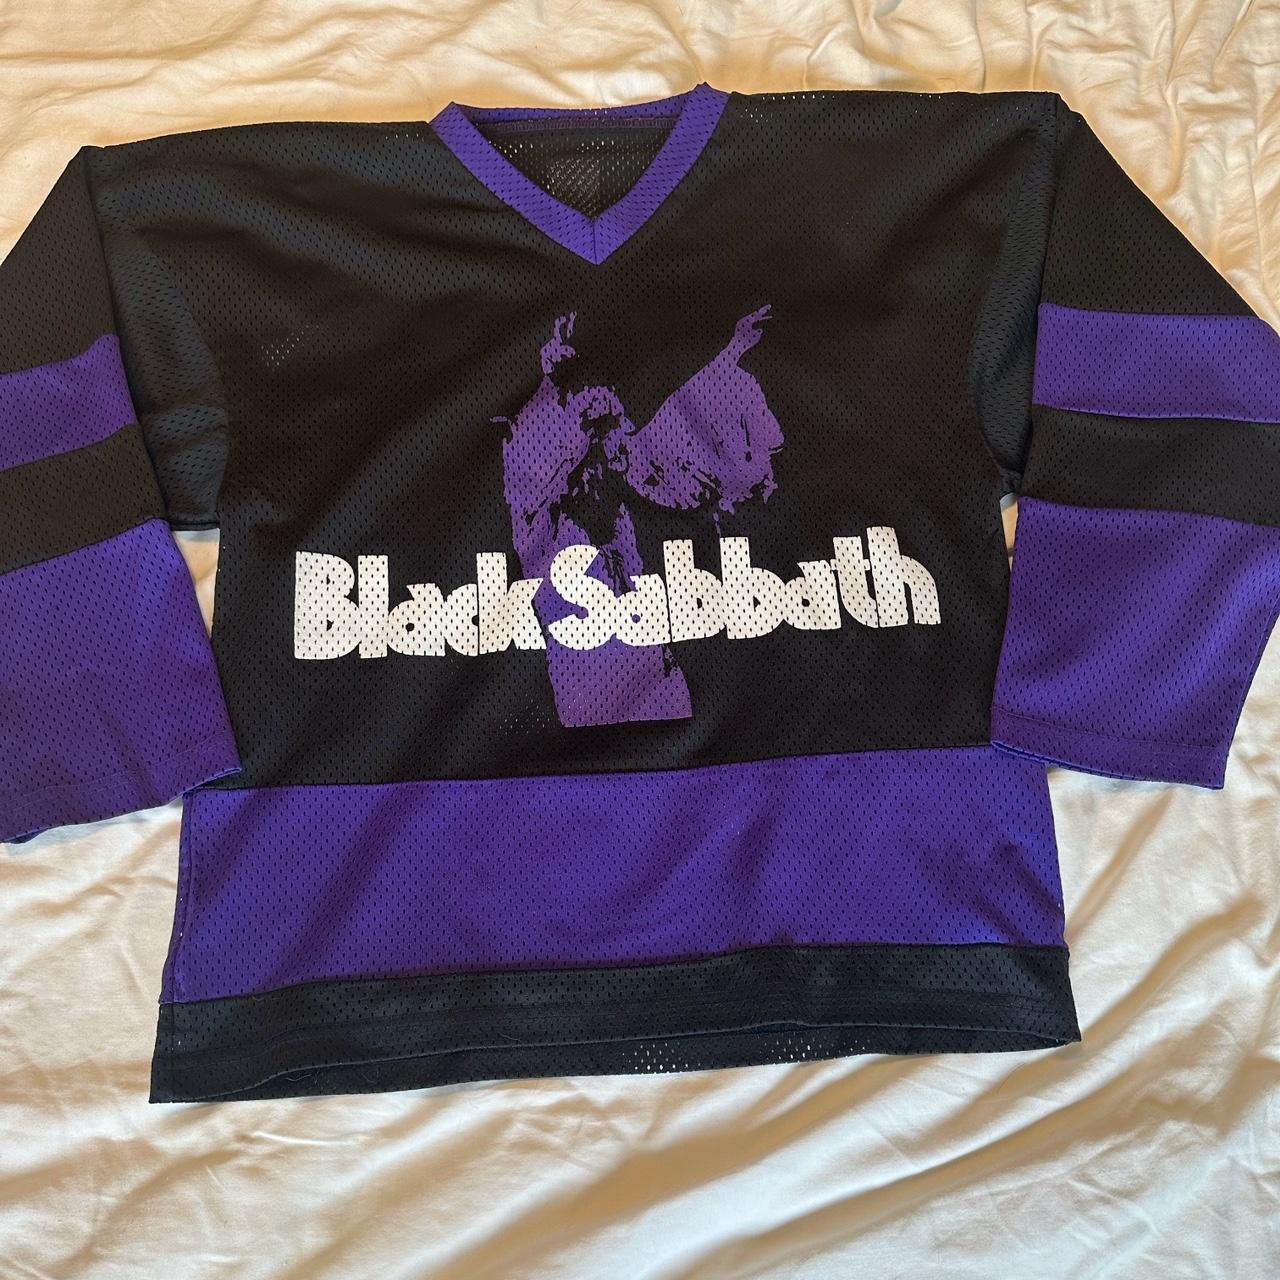 Black Sabbath Vol. 4 vintage hockey jersey from the... - Depop